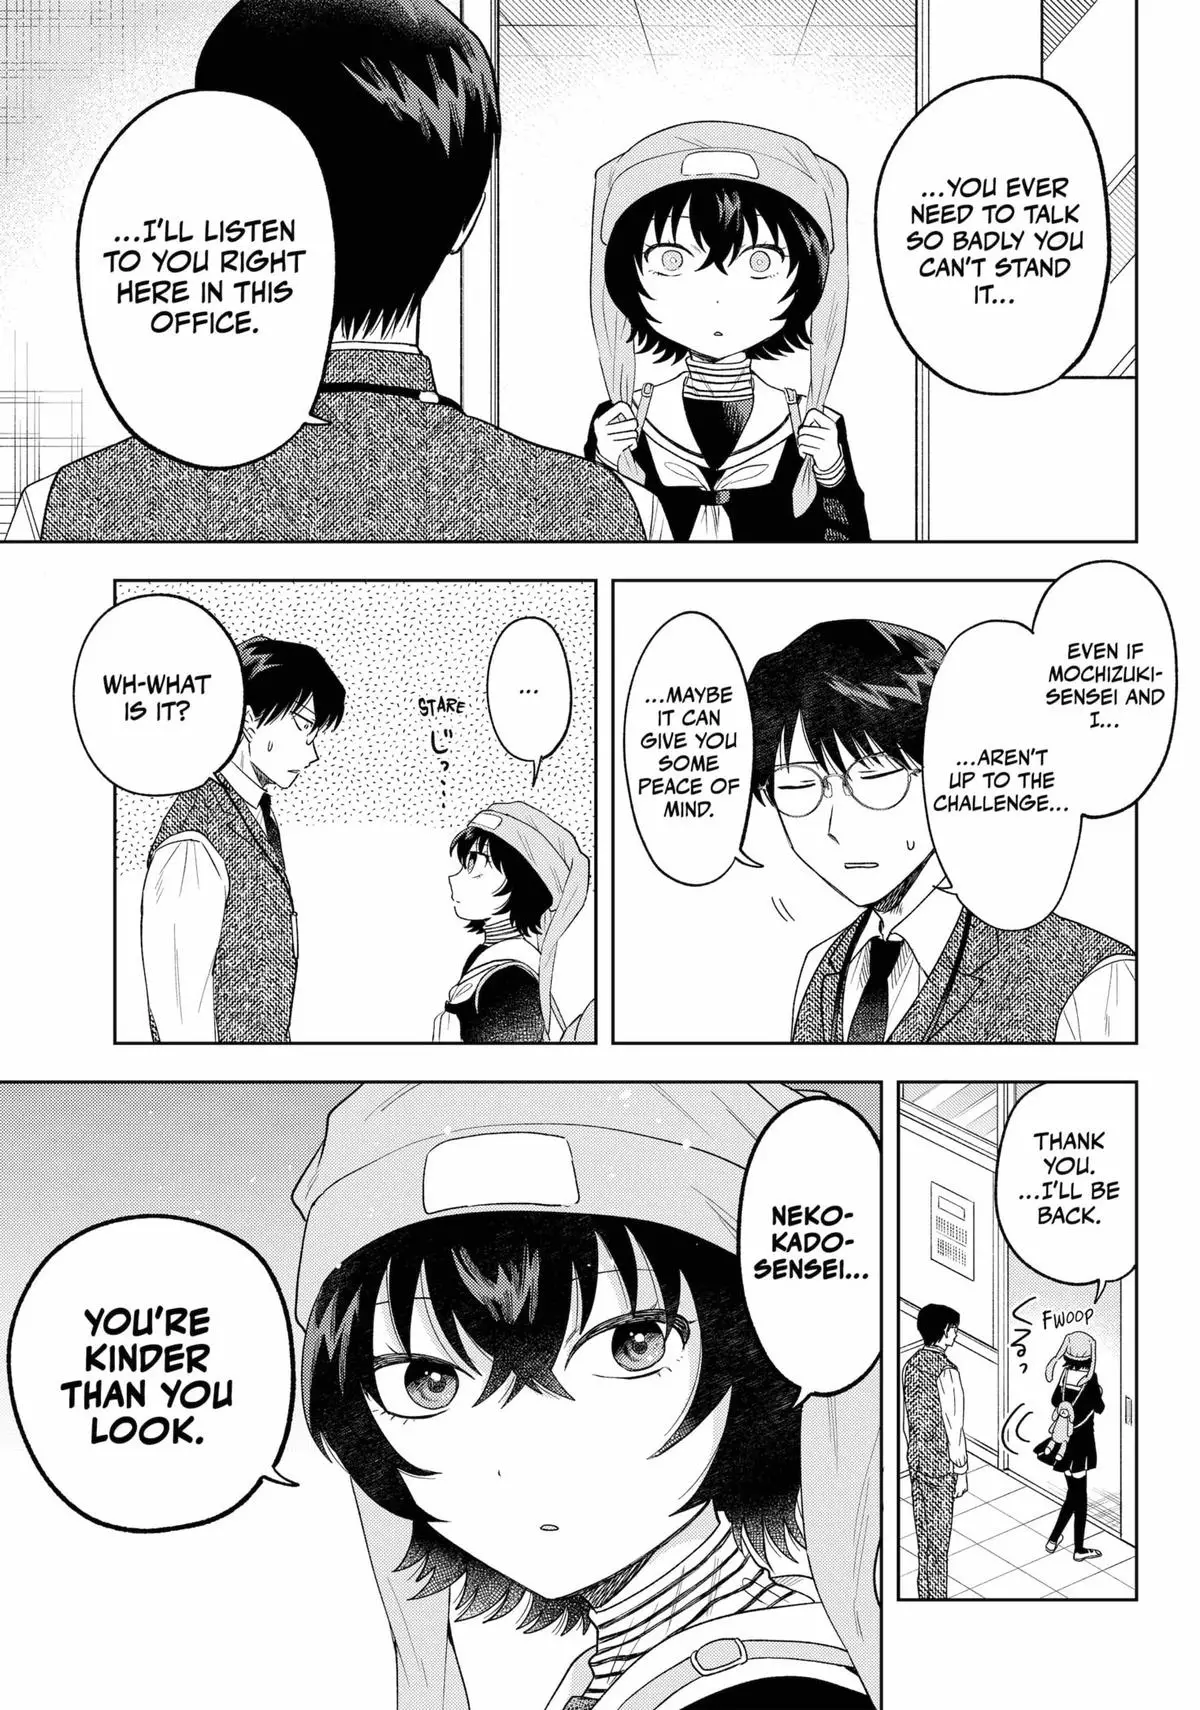 Tsuruko Returns The Favor - 15 page 13-14abc95a